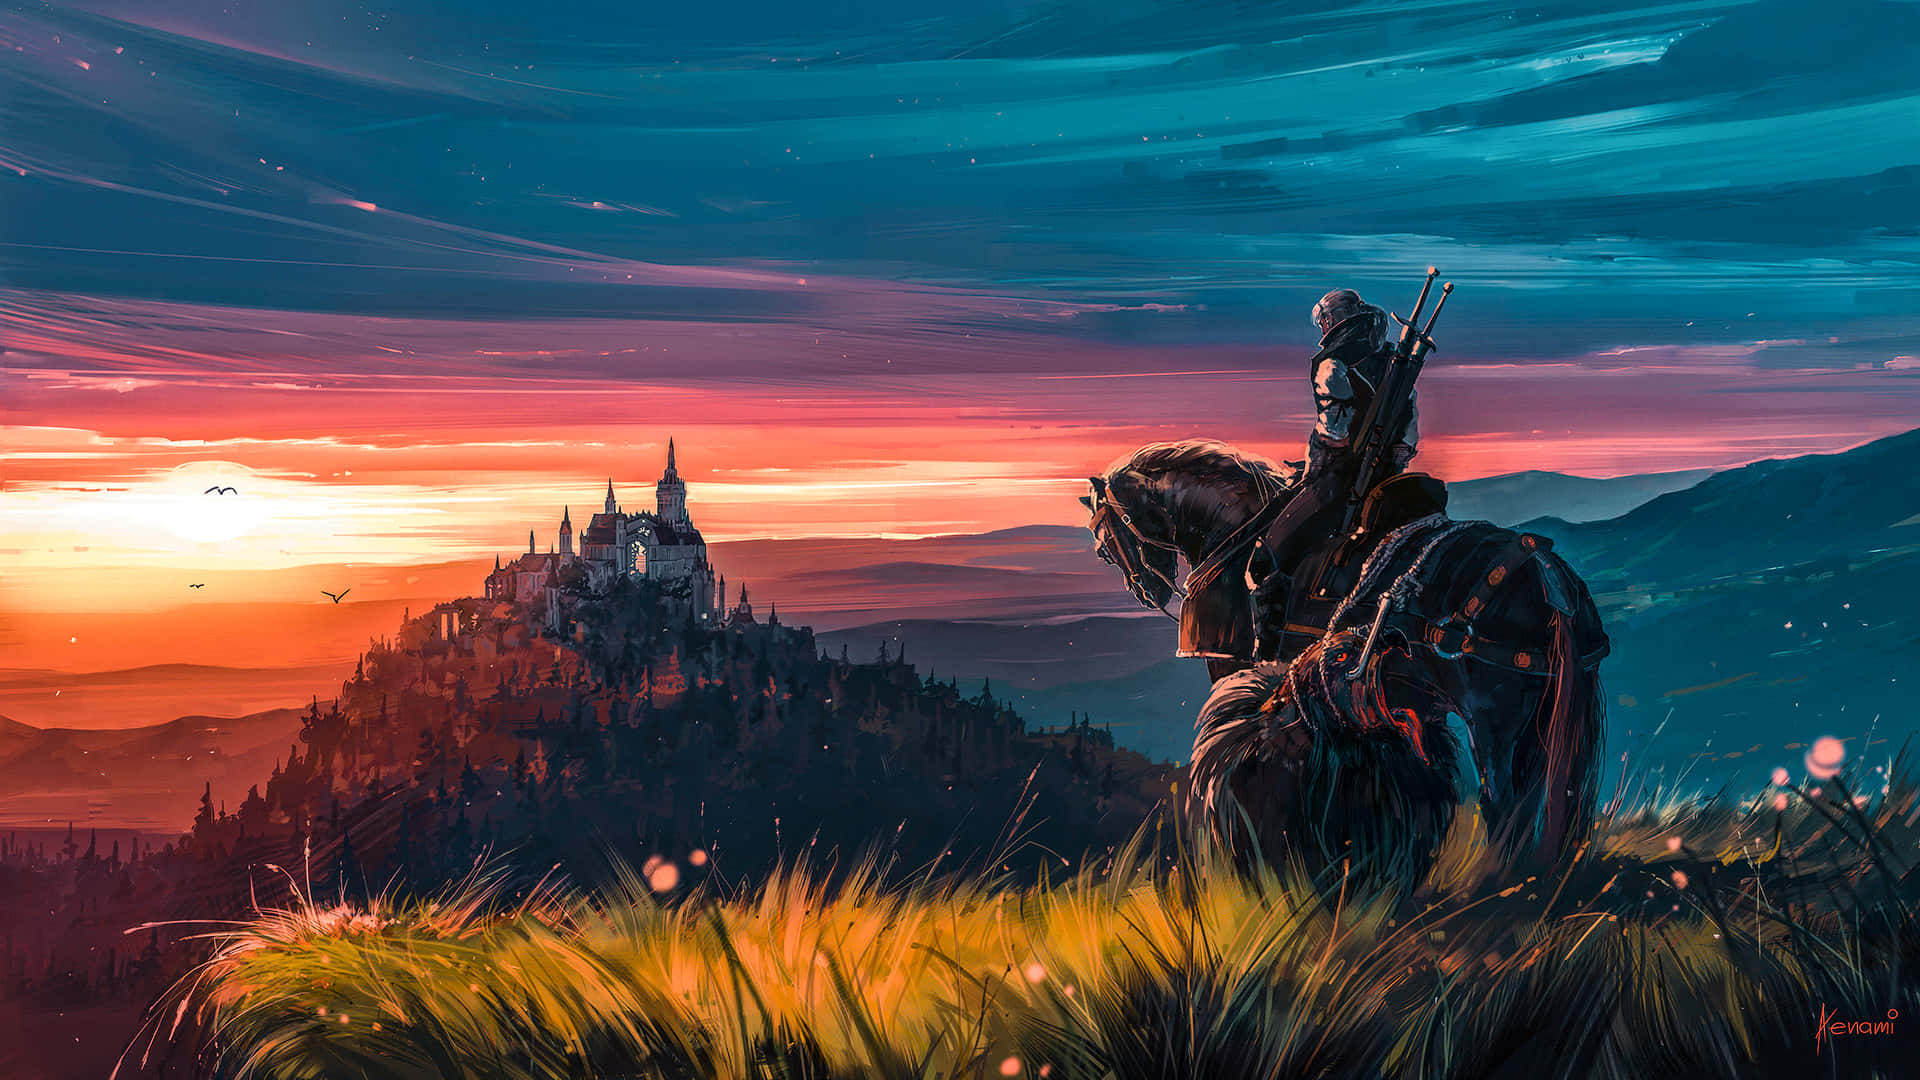 The Witcher's Journey – Fantasy Landscape Wallpaper